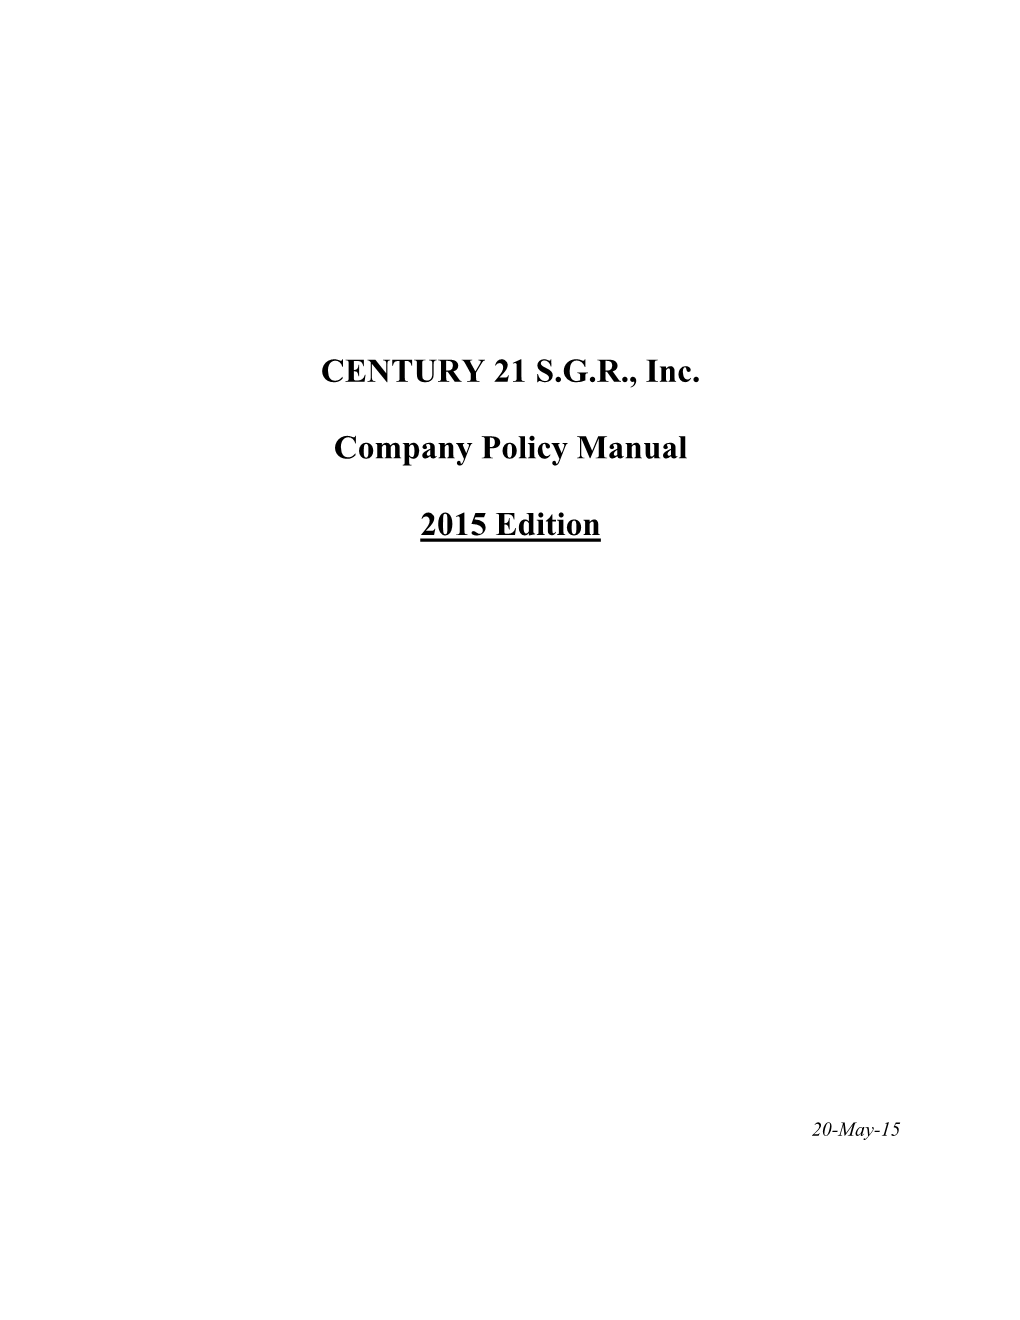 CENTURY 21 S.G.R., Inc. Company Policy Manual 2015 Edition